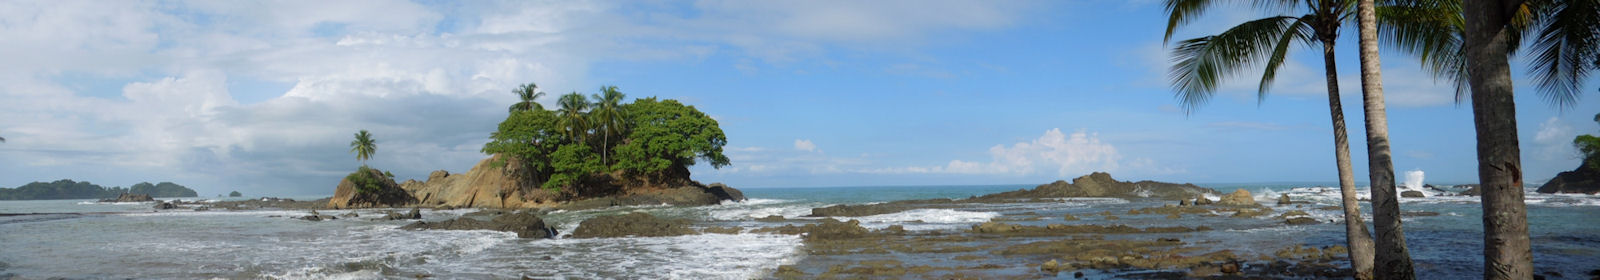 Costa Rica Lifestyle Blog